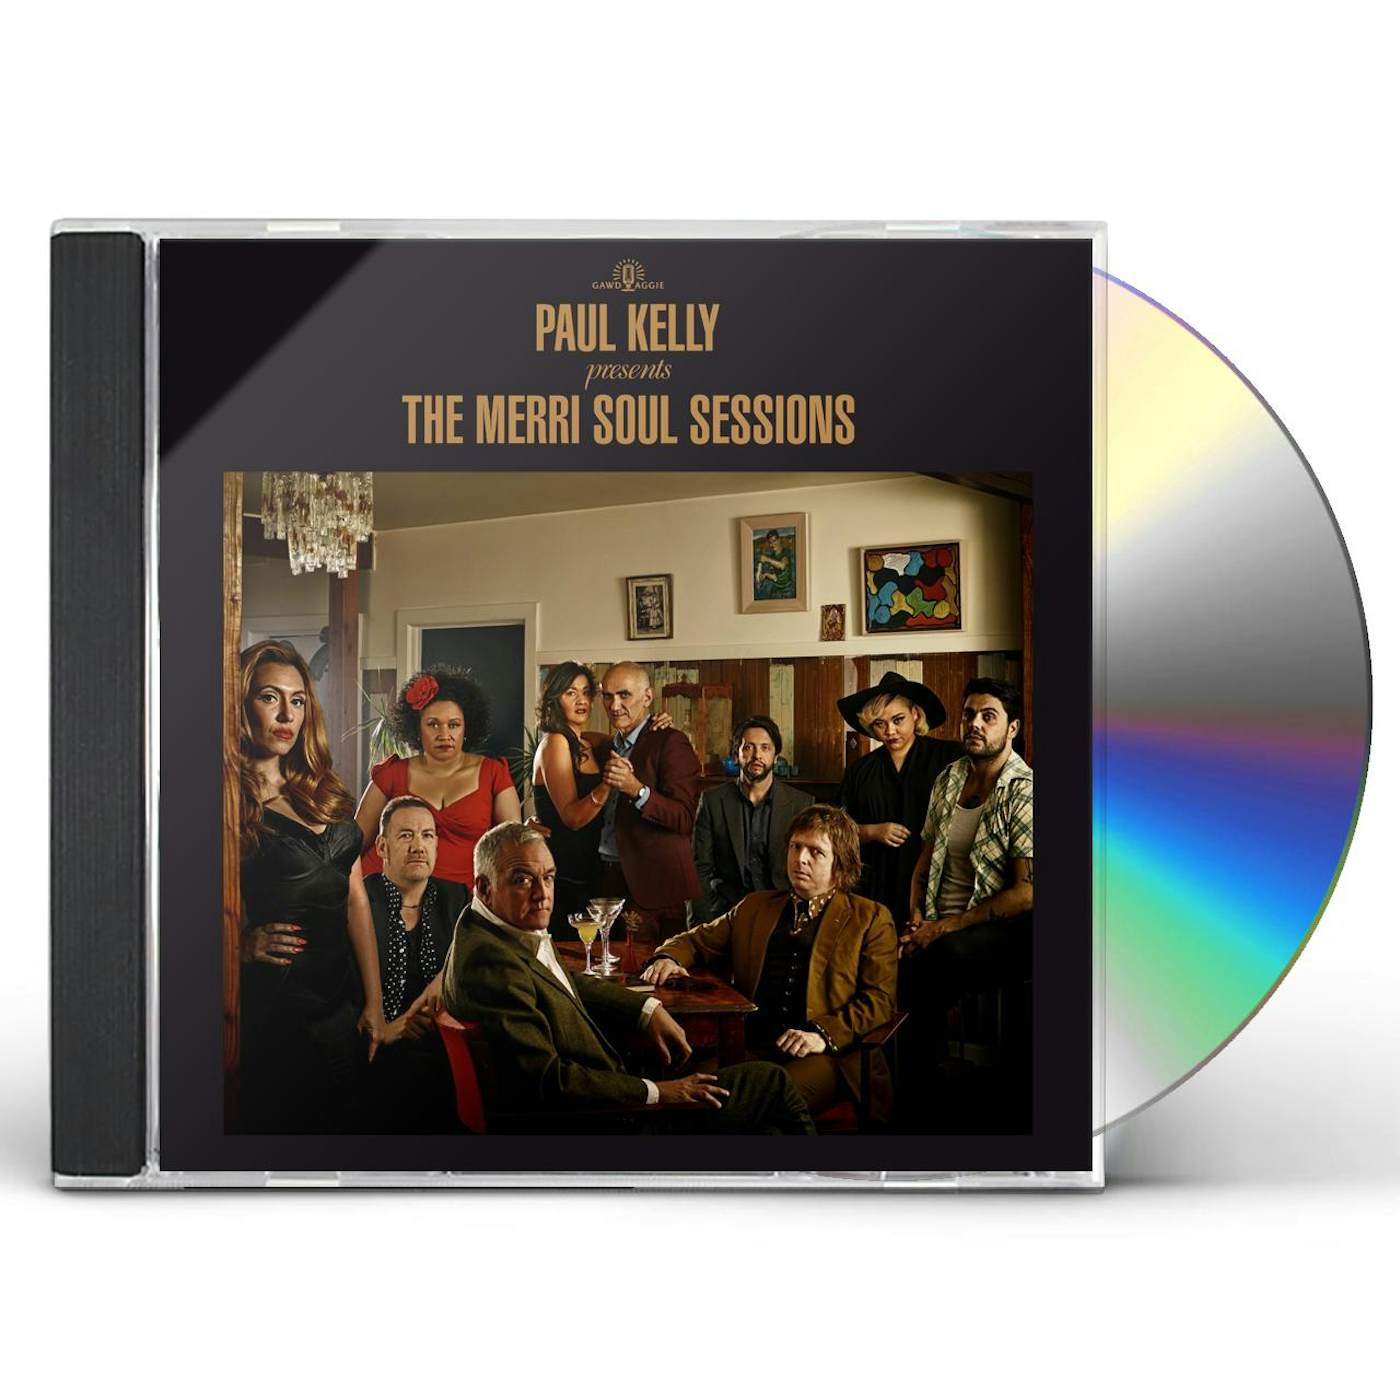 PAUL KELLY PRESENTS: THE MERRI SOUL SESSIONS CD